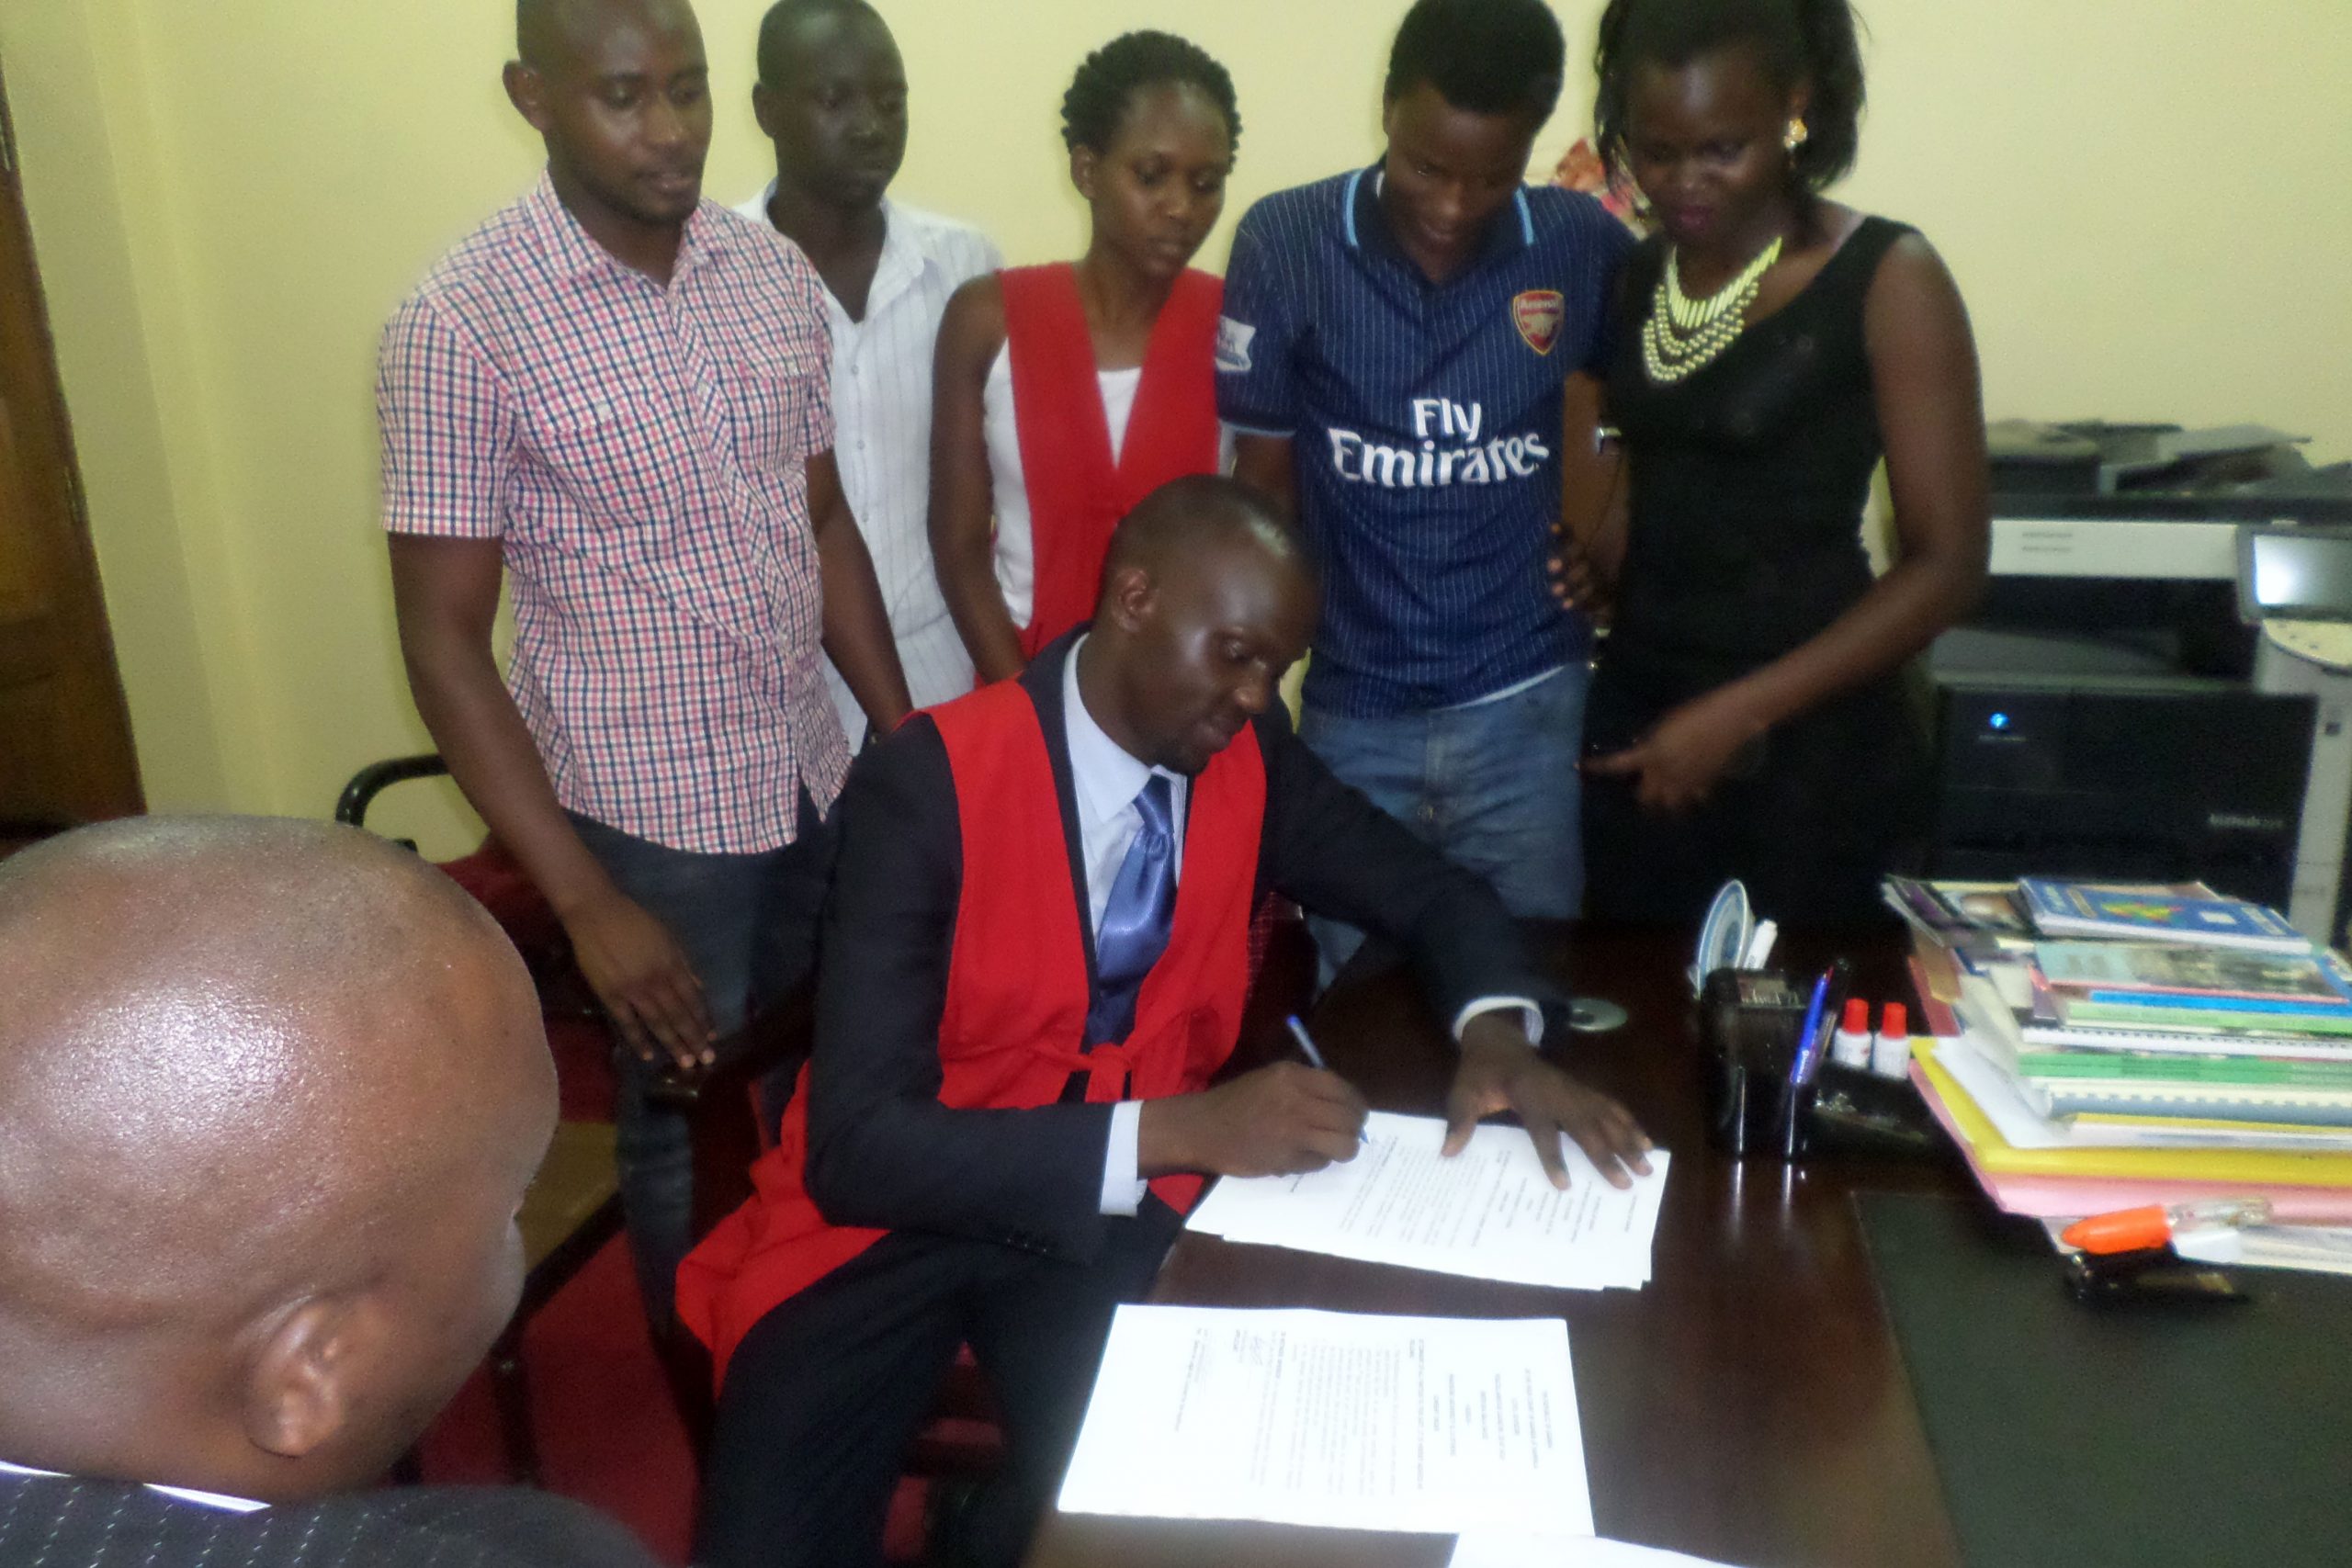 Bala David signs the consent form